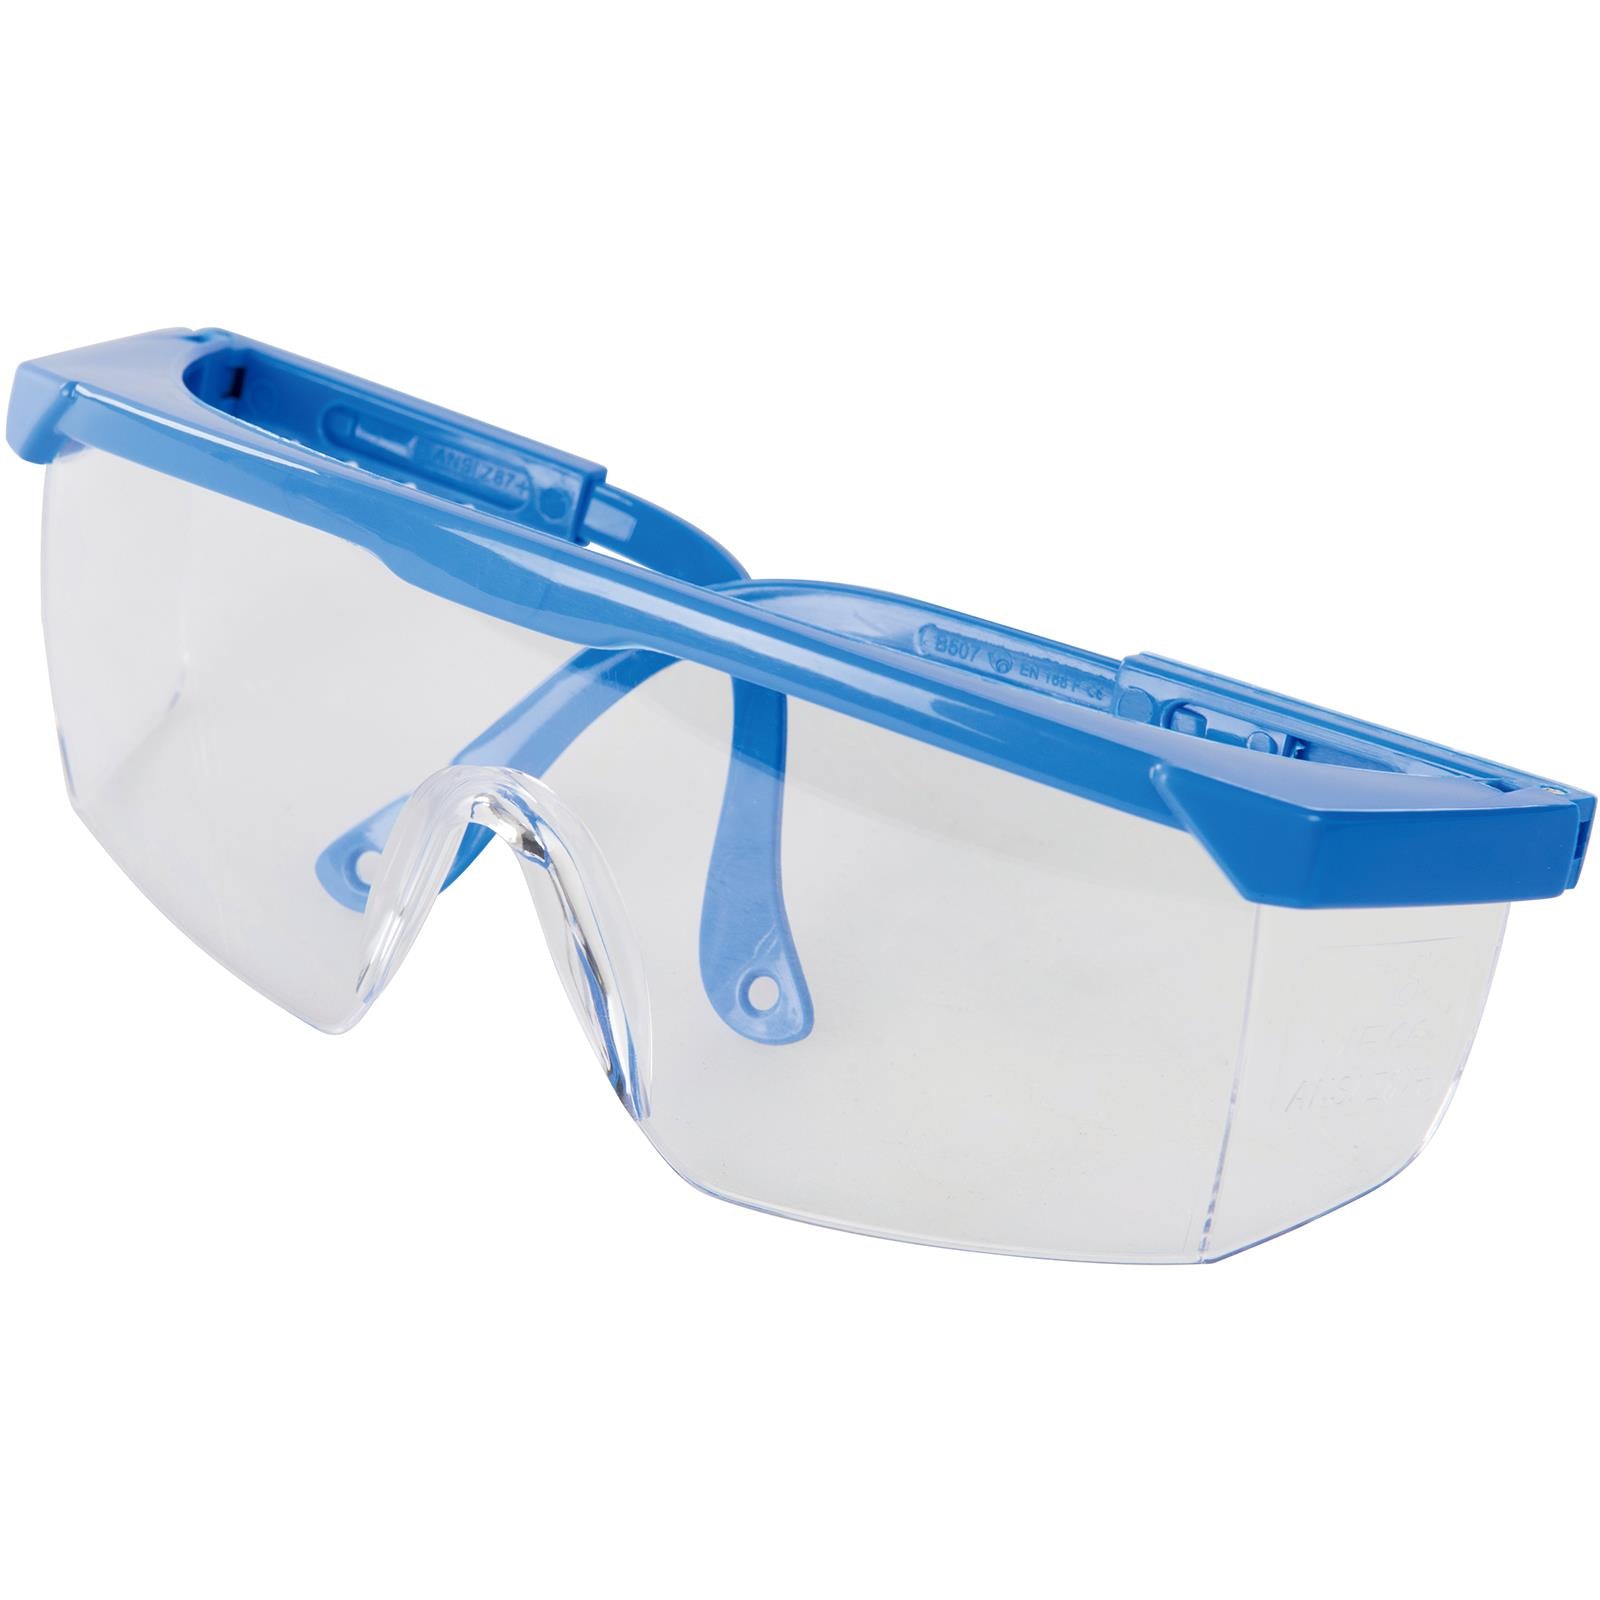 Silverline Clear Safety Glasses Goggles Eye Protection Eyewear Wraparound